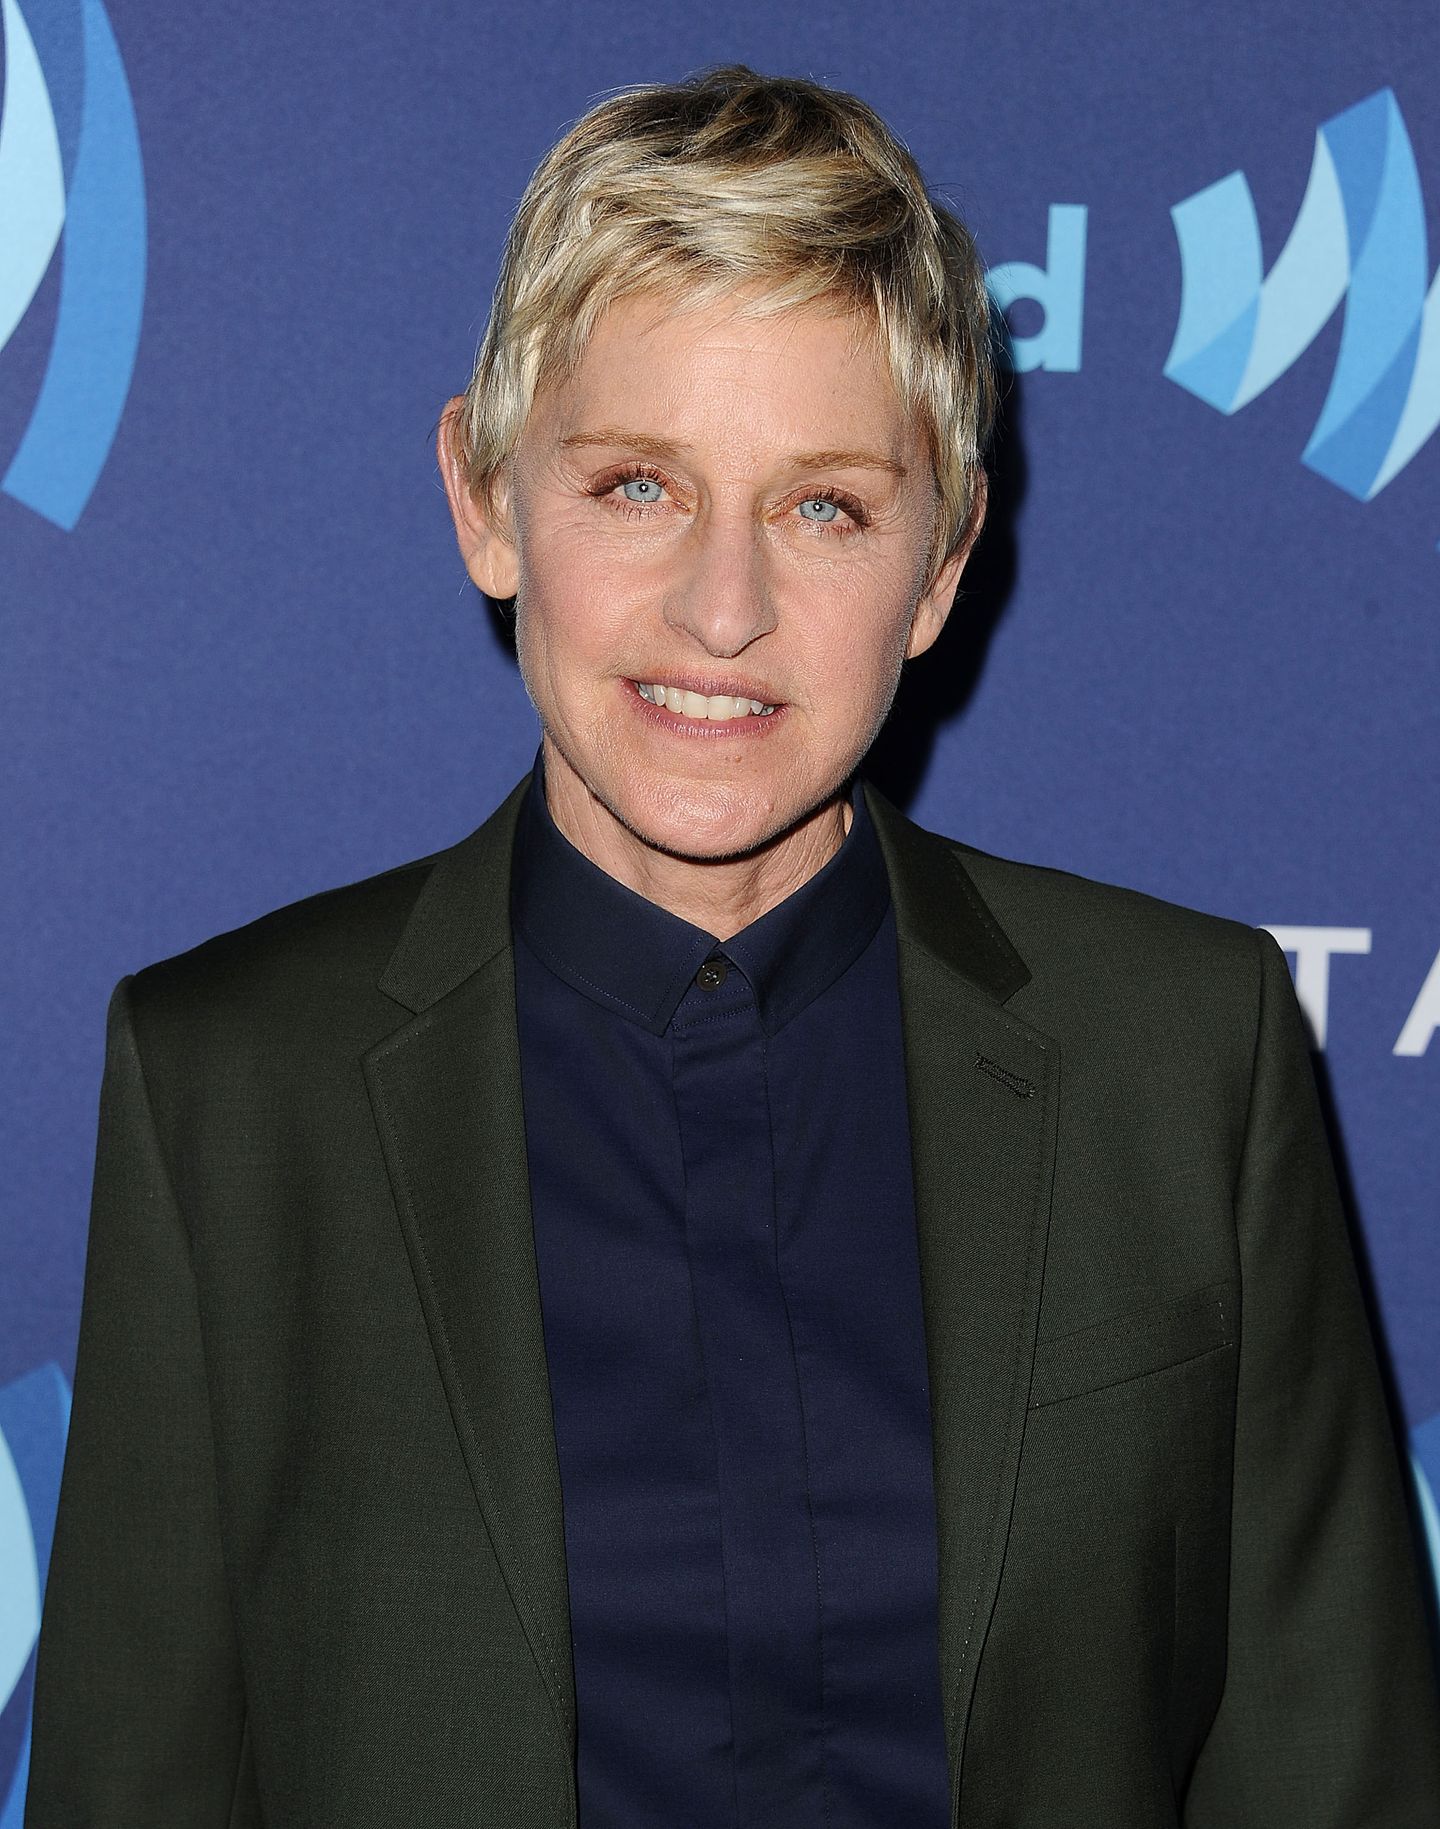 Ellen DeGeneres, Moderatorin